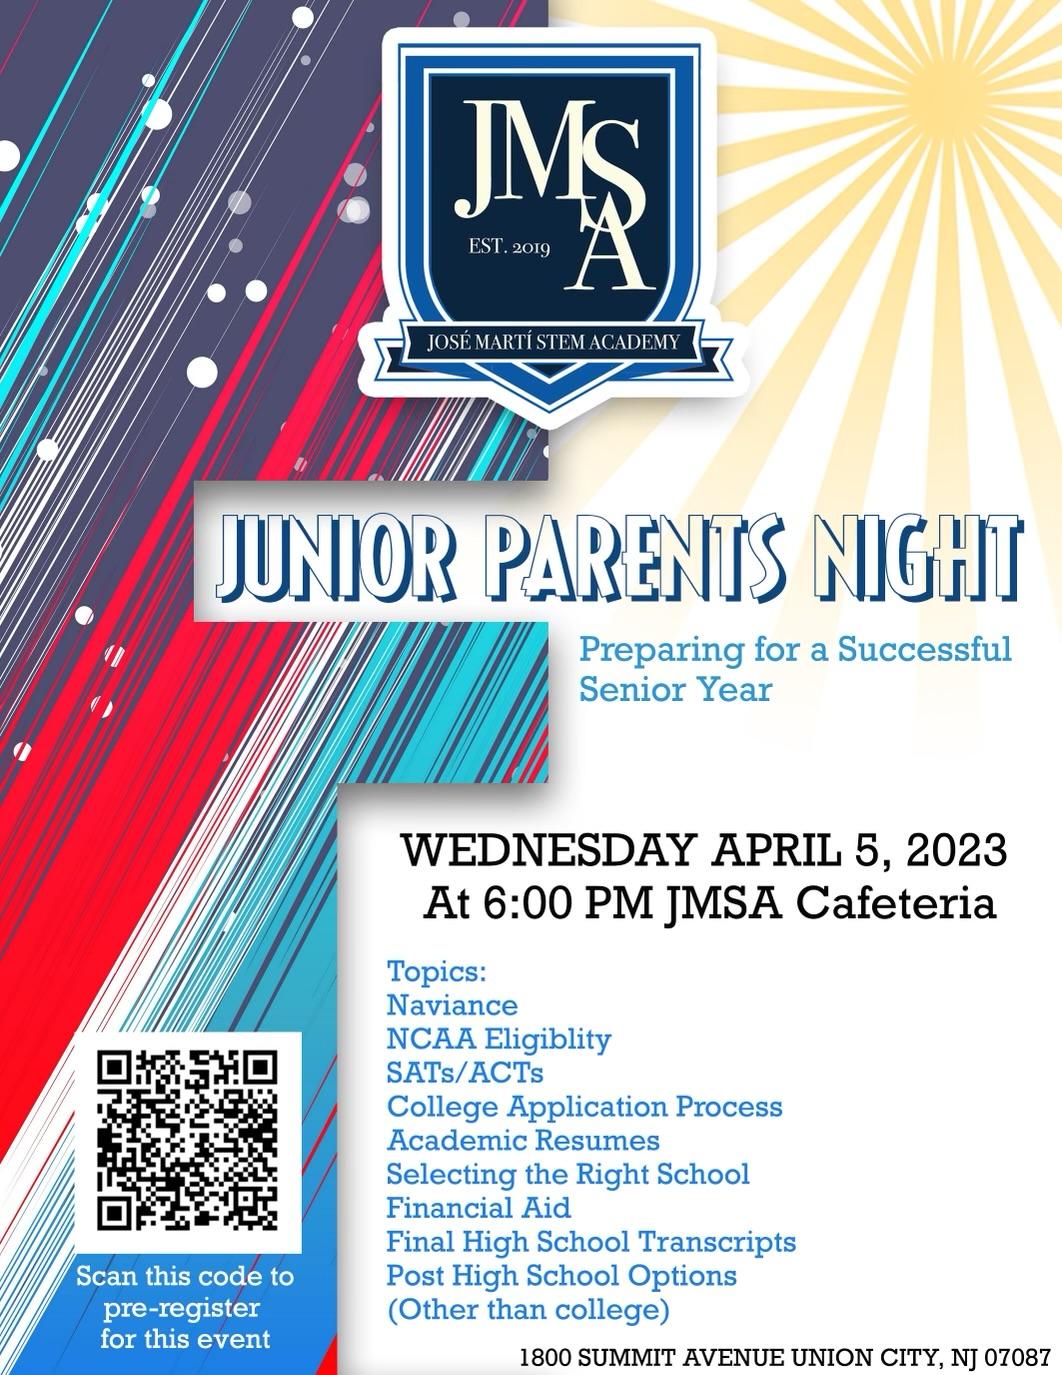 Junior Parents Night on Wednesday April 5, 2023